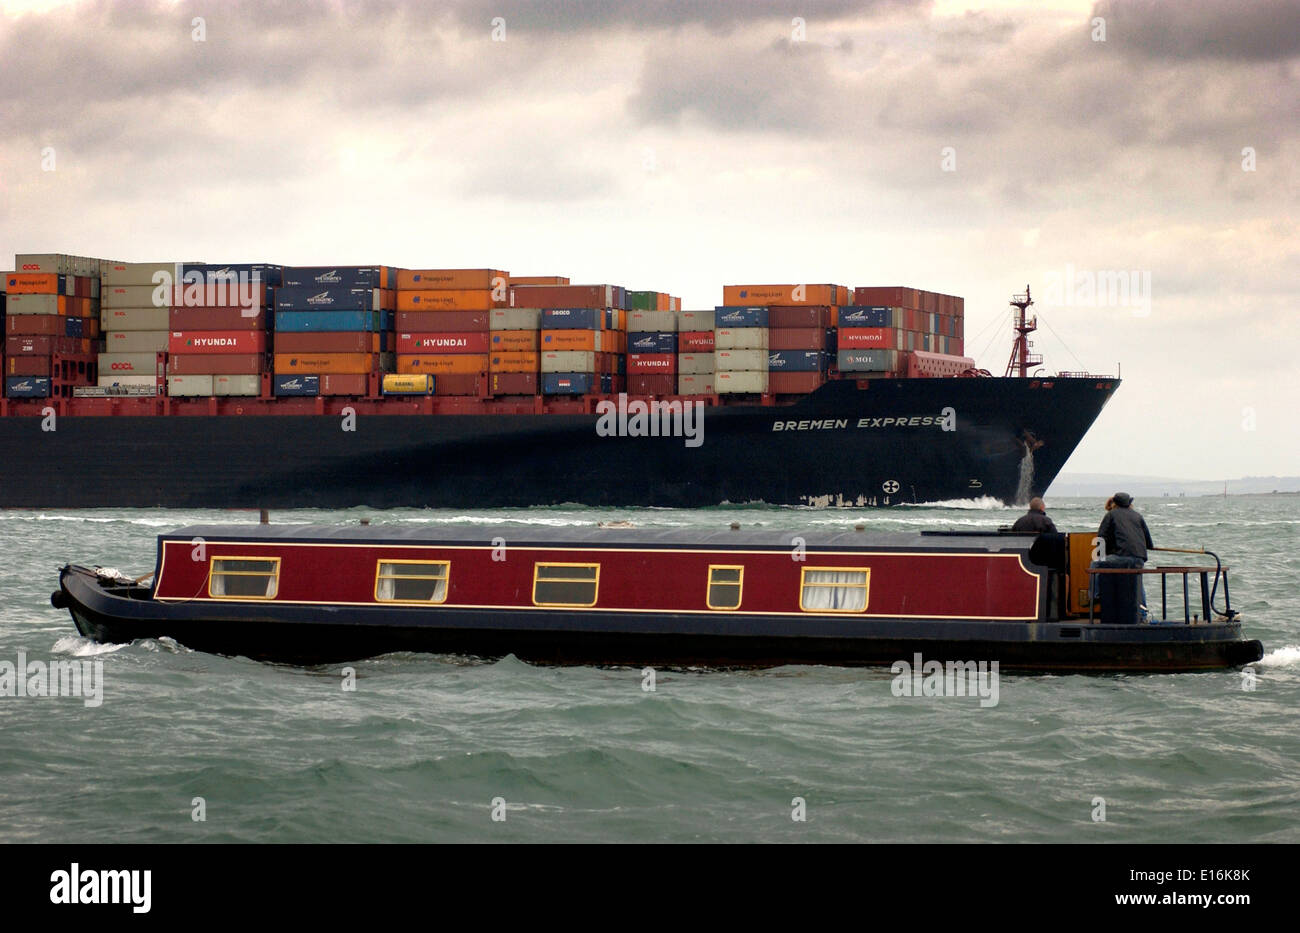 AJAXNETPHOTO. 2009. SOUTHAMPTON, INGHILTERRA. - Canal boat in transito nel Solent nanizzato dalla nave container Hapag Lloyd Bremen Express. Foto: Jonathan Eastland Rif: 91609 2989 Foto Stock